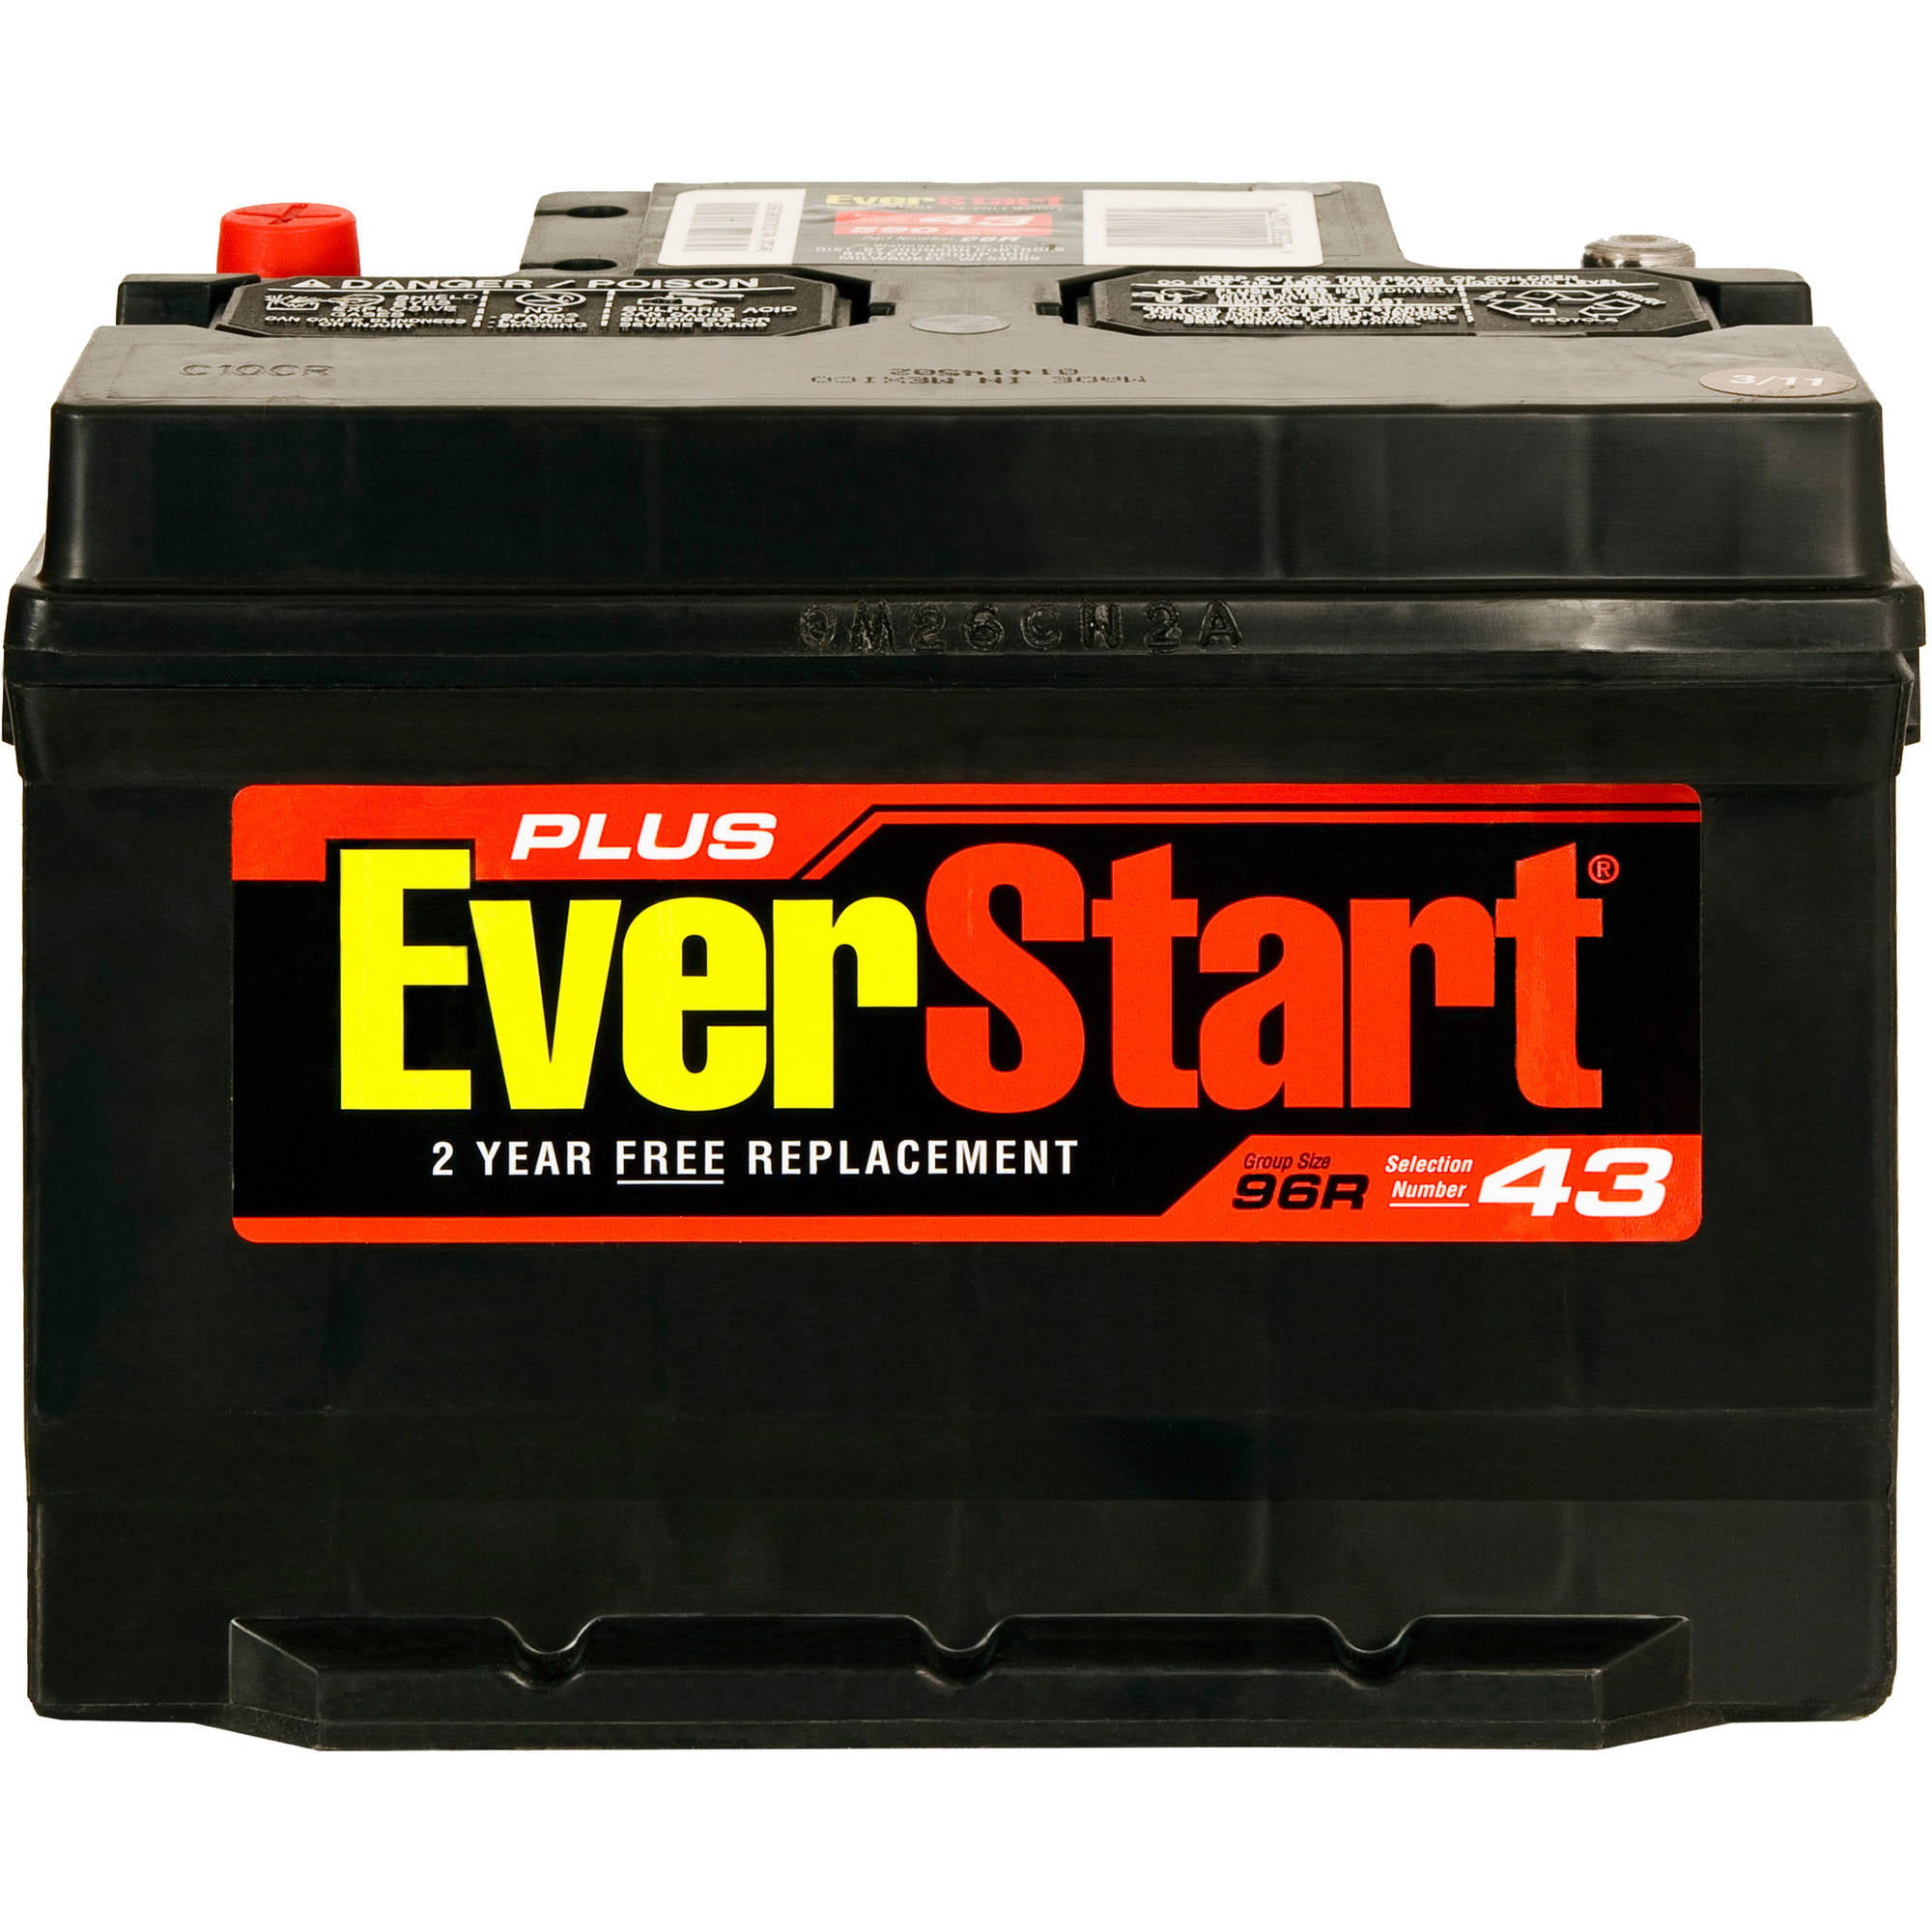 R battery. BXT-96r аккумулятор. Аккумулятор ever start. Bxt96r590. Everstart аккумулятор автомобильный.